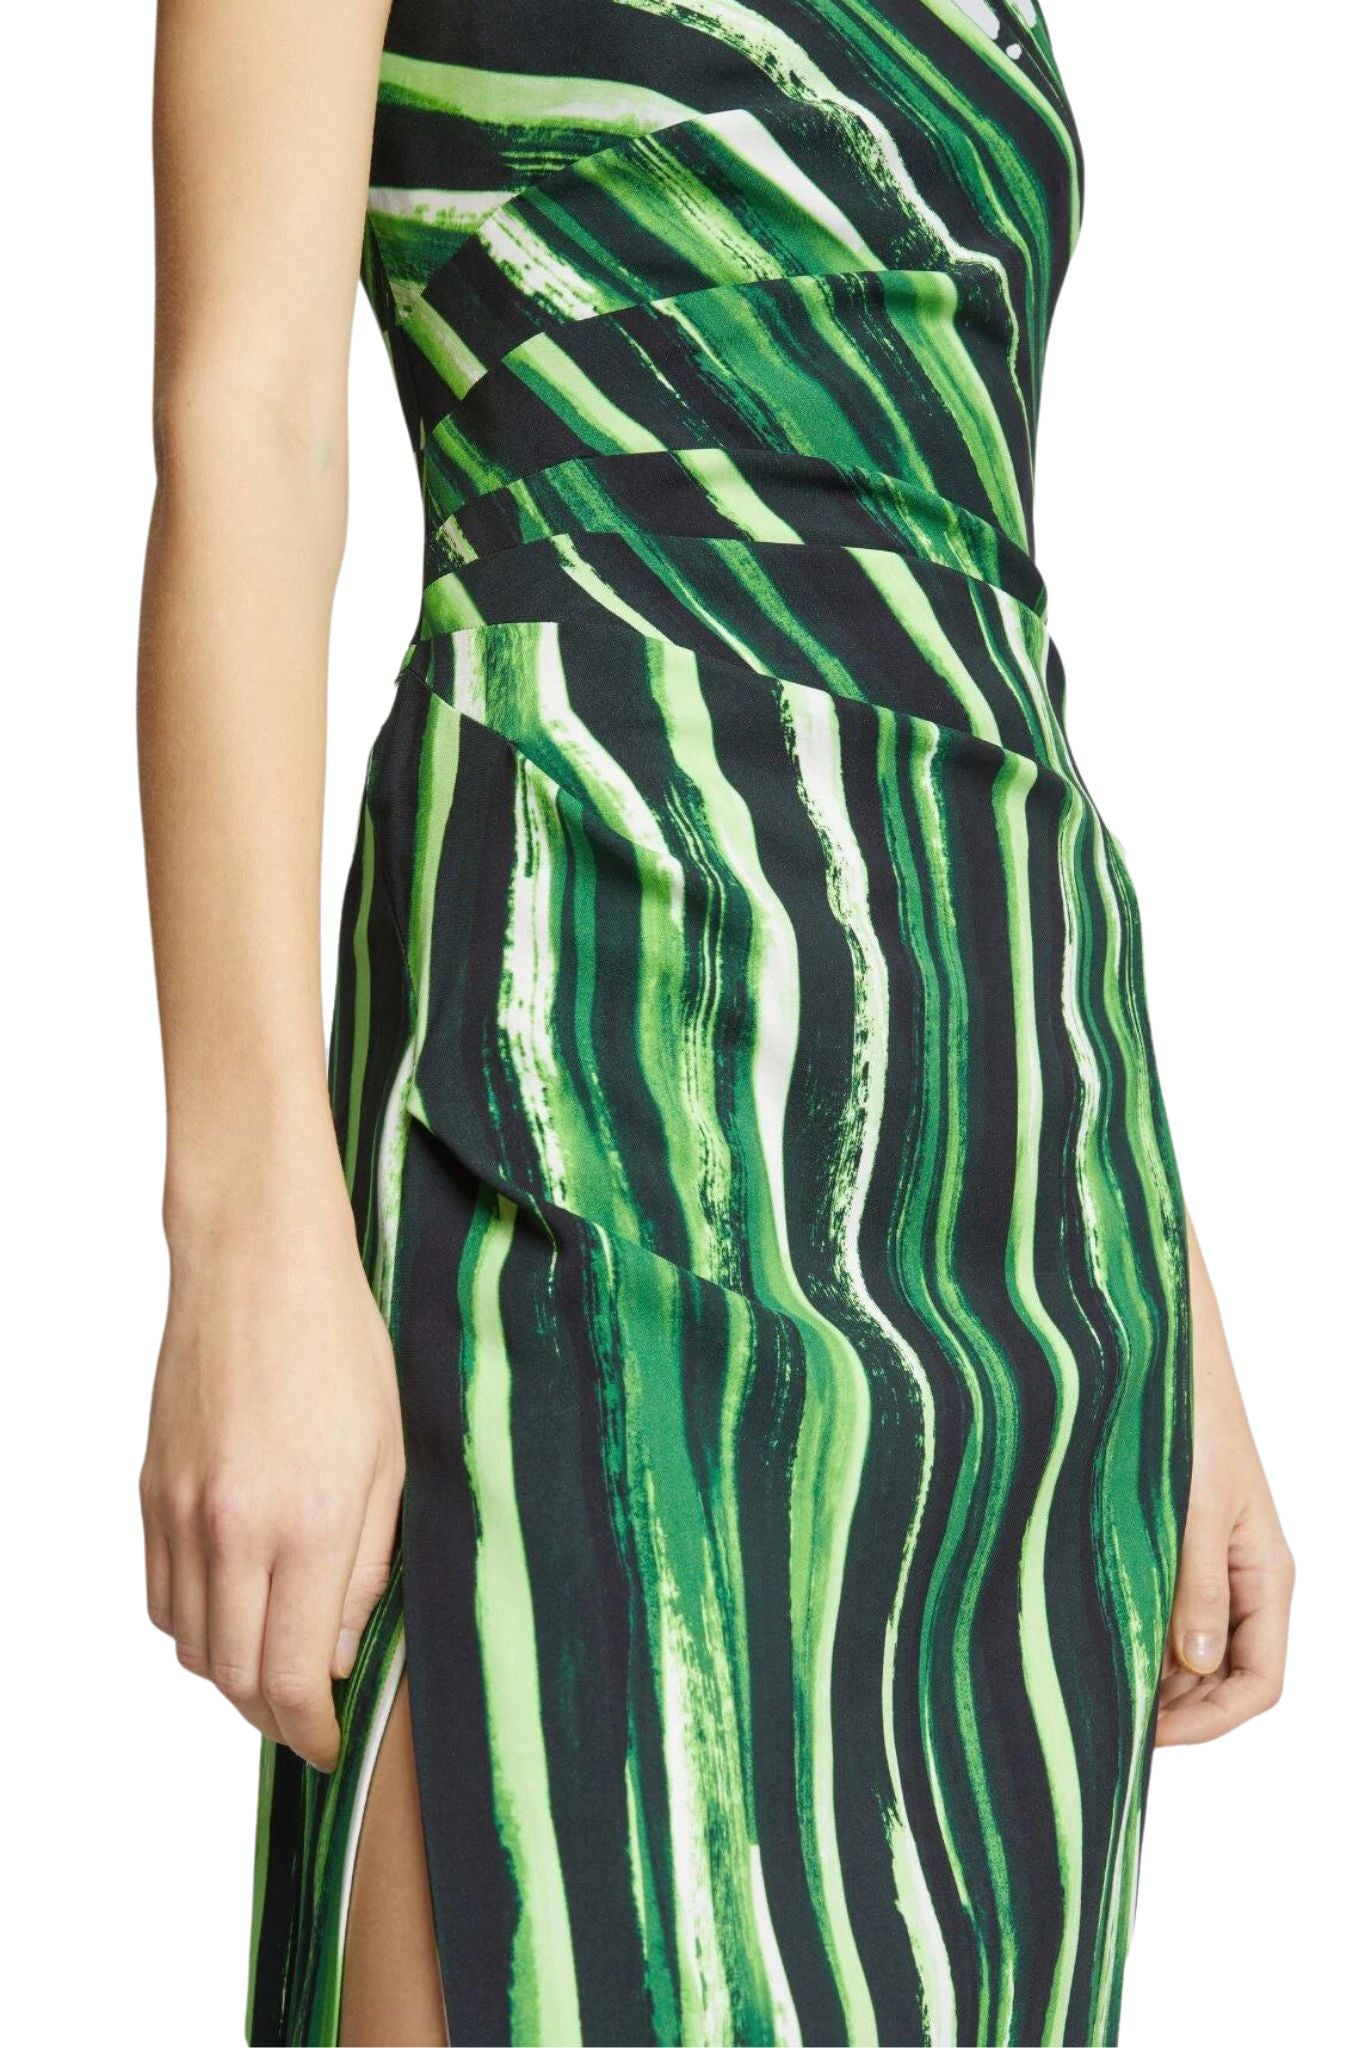 Proenza Schouler Painted Stripe Strapless Dress